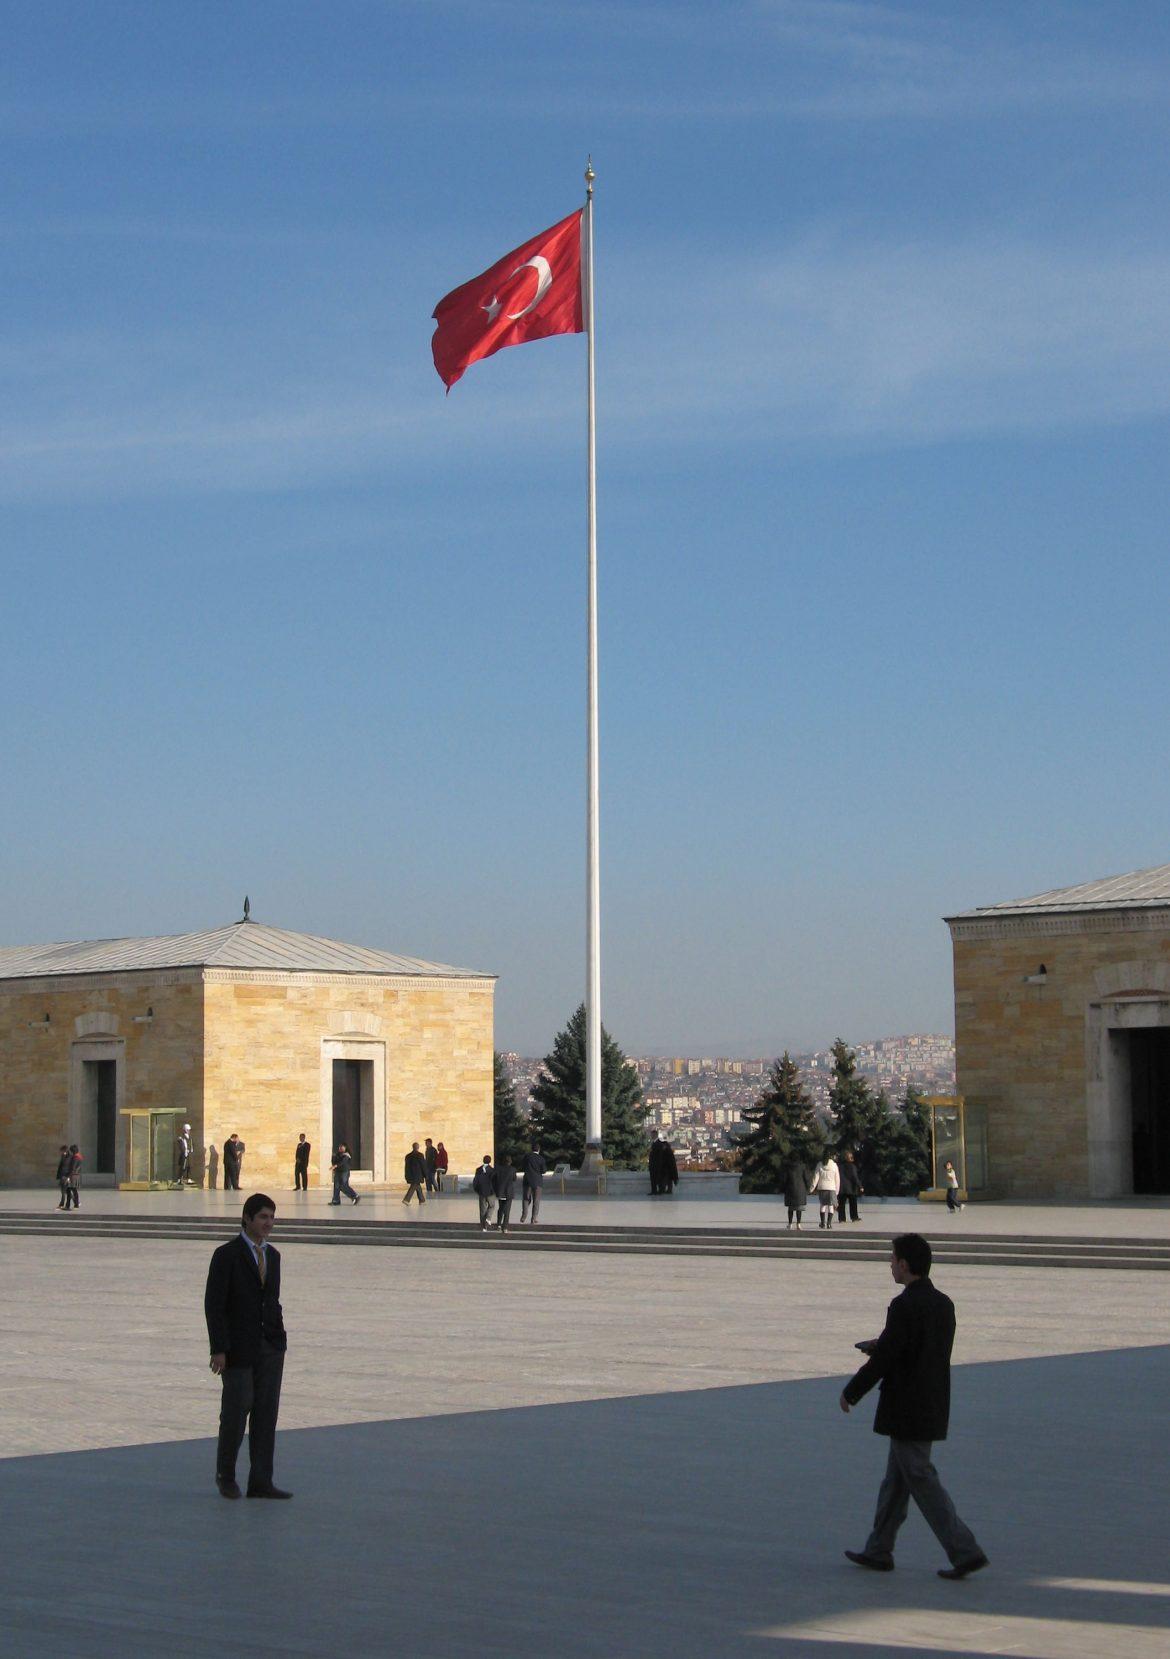 The Turkish flag flies over the plaza at the monument to Mustafa Kemal Ataturk in Ankara, Turkey. (Matt Schofield/MCT)